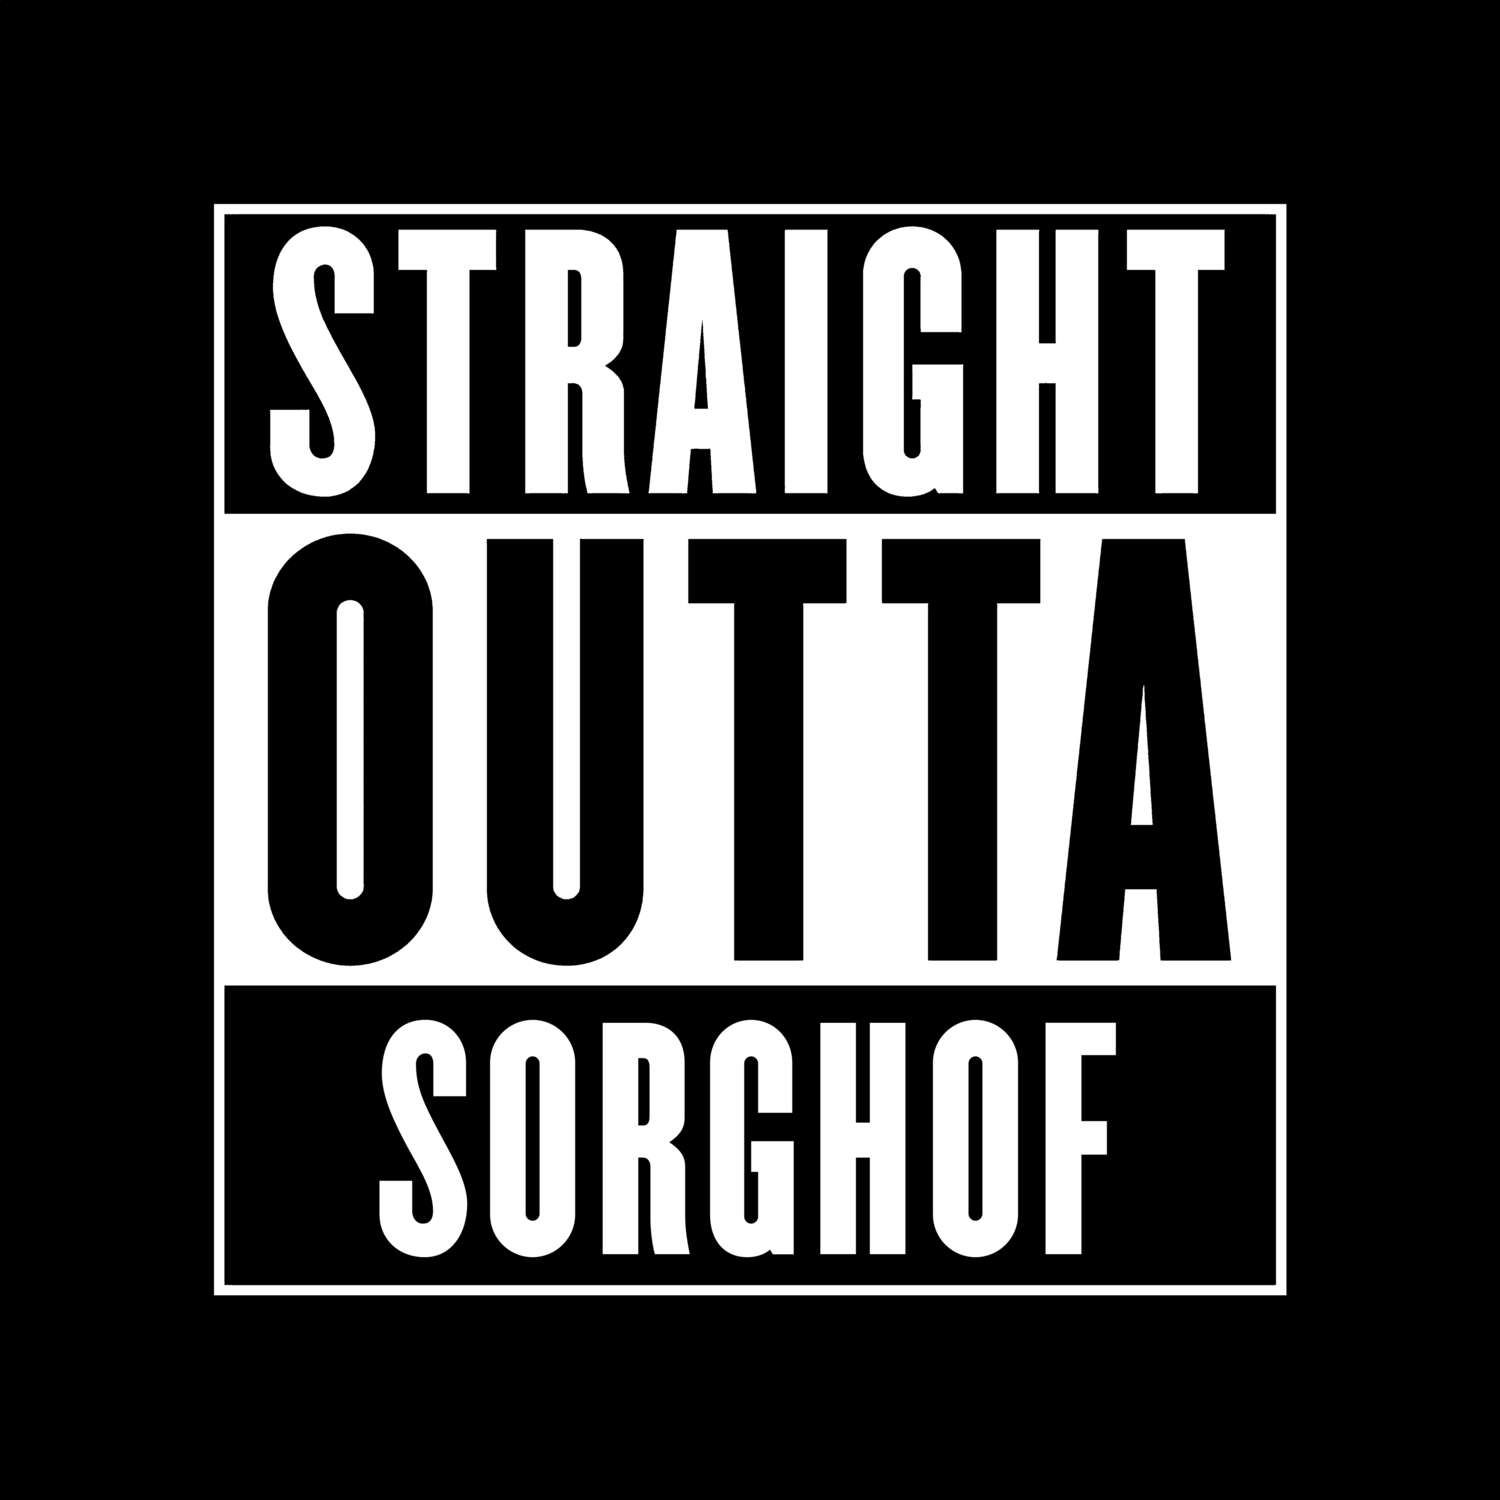 Sorghof T-Shirt »Straight Outta«